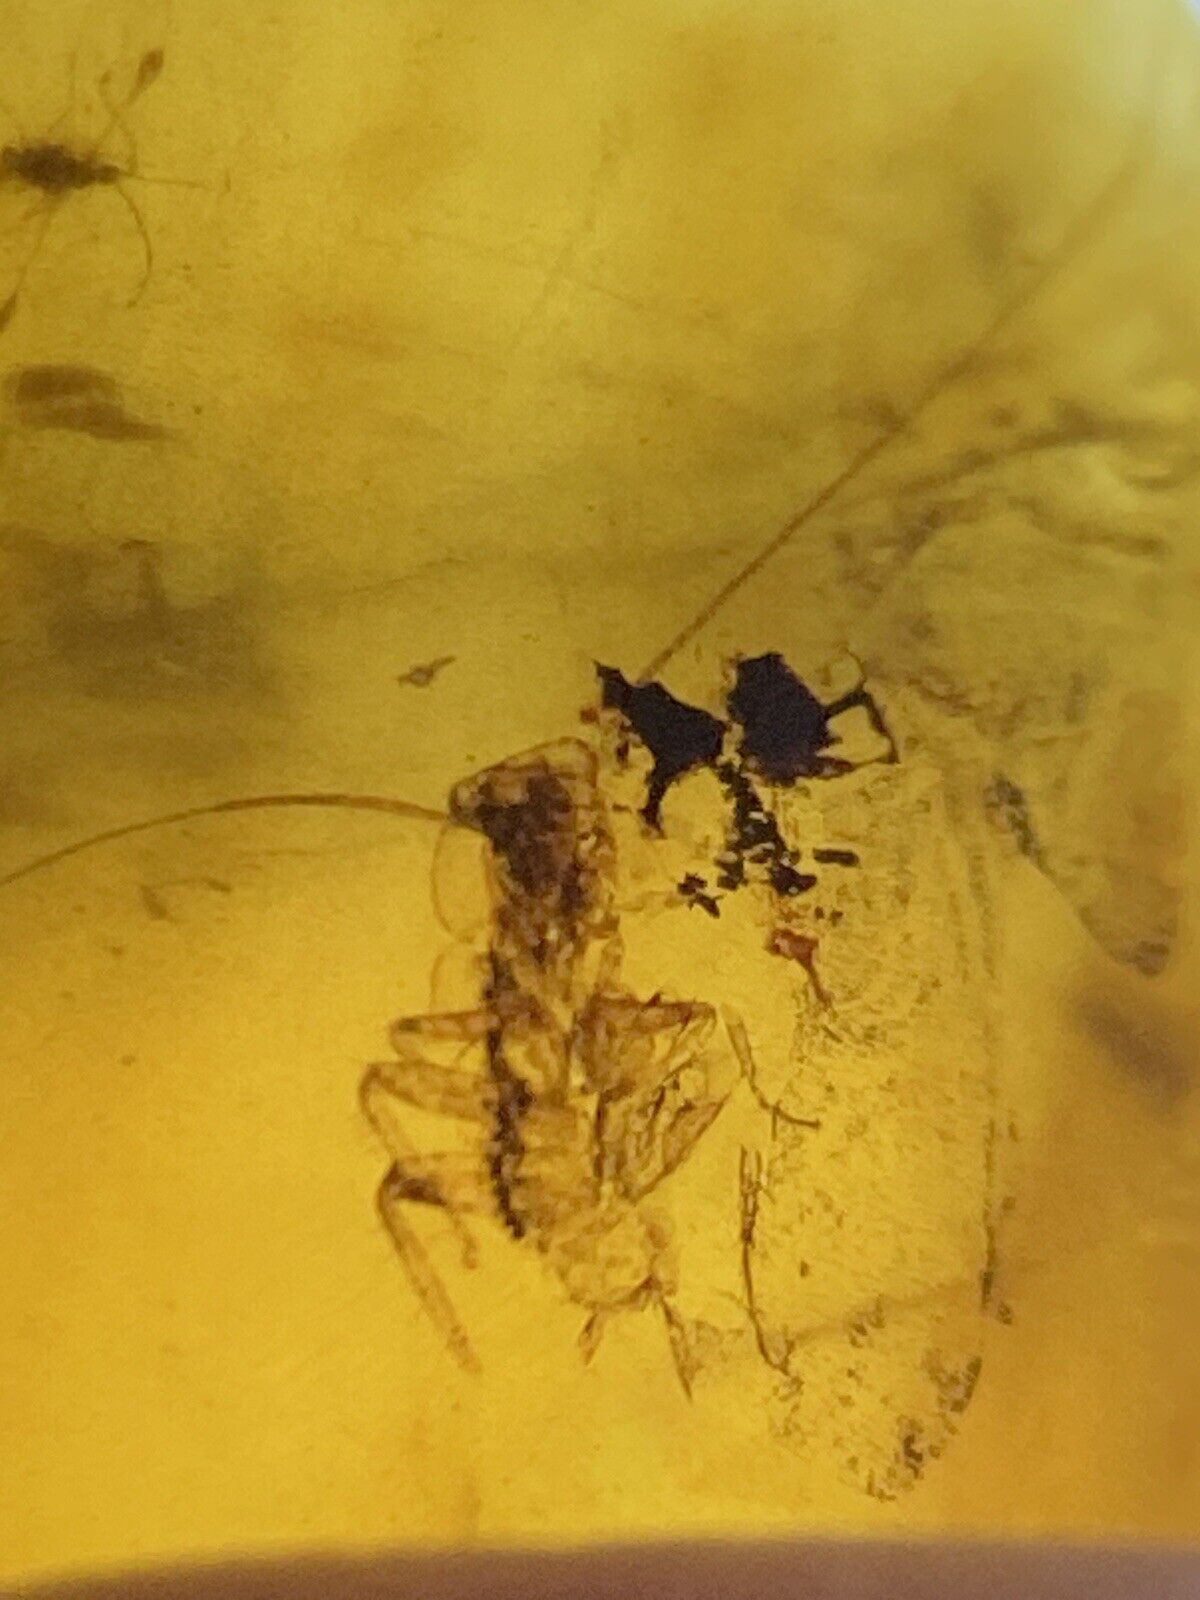 Tiny Perfect Roach, Cockroach Fossil Inclusion in Genuine Burmite Amber, 98MYO